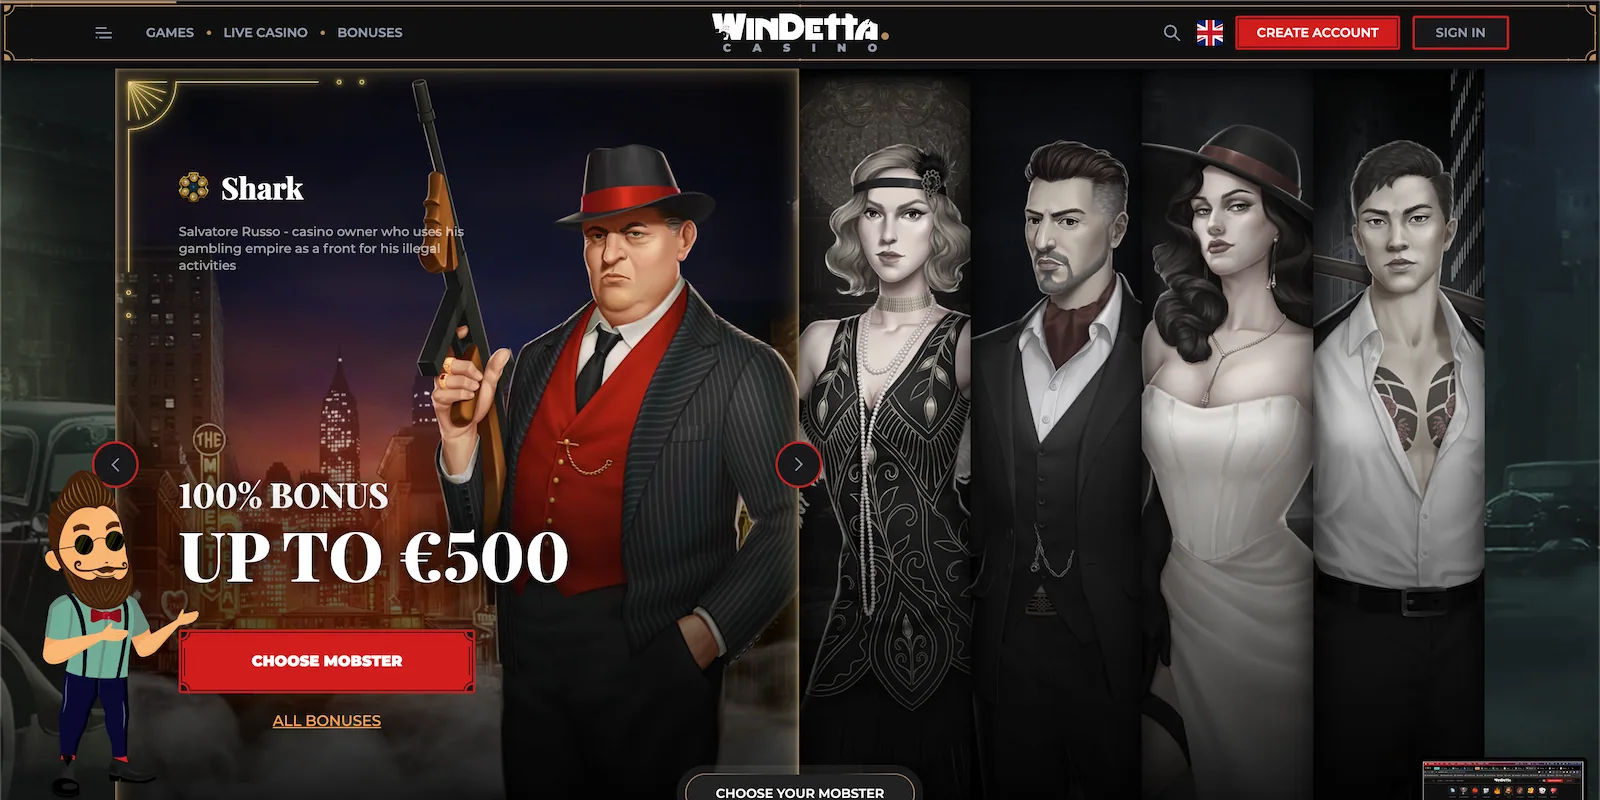 Honest Windetta Casino Review